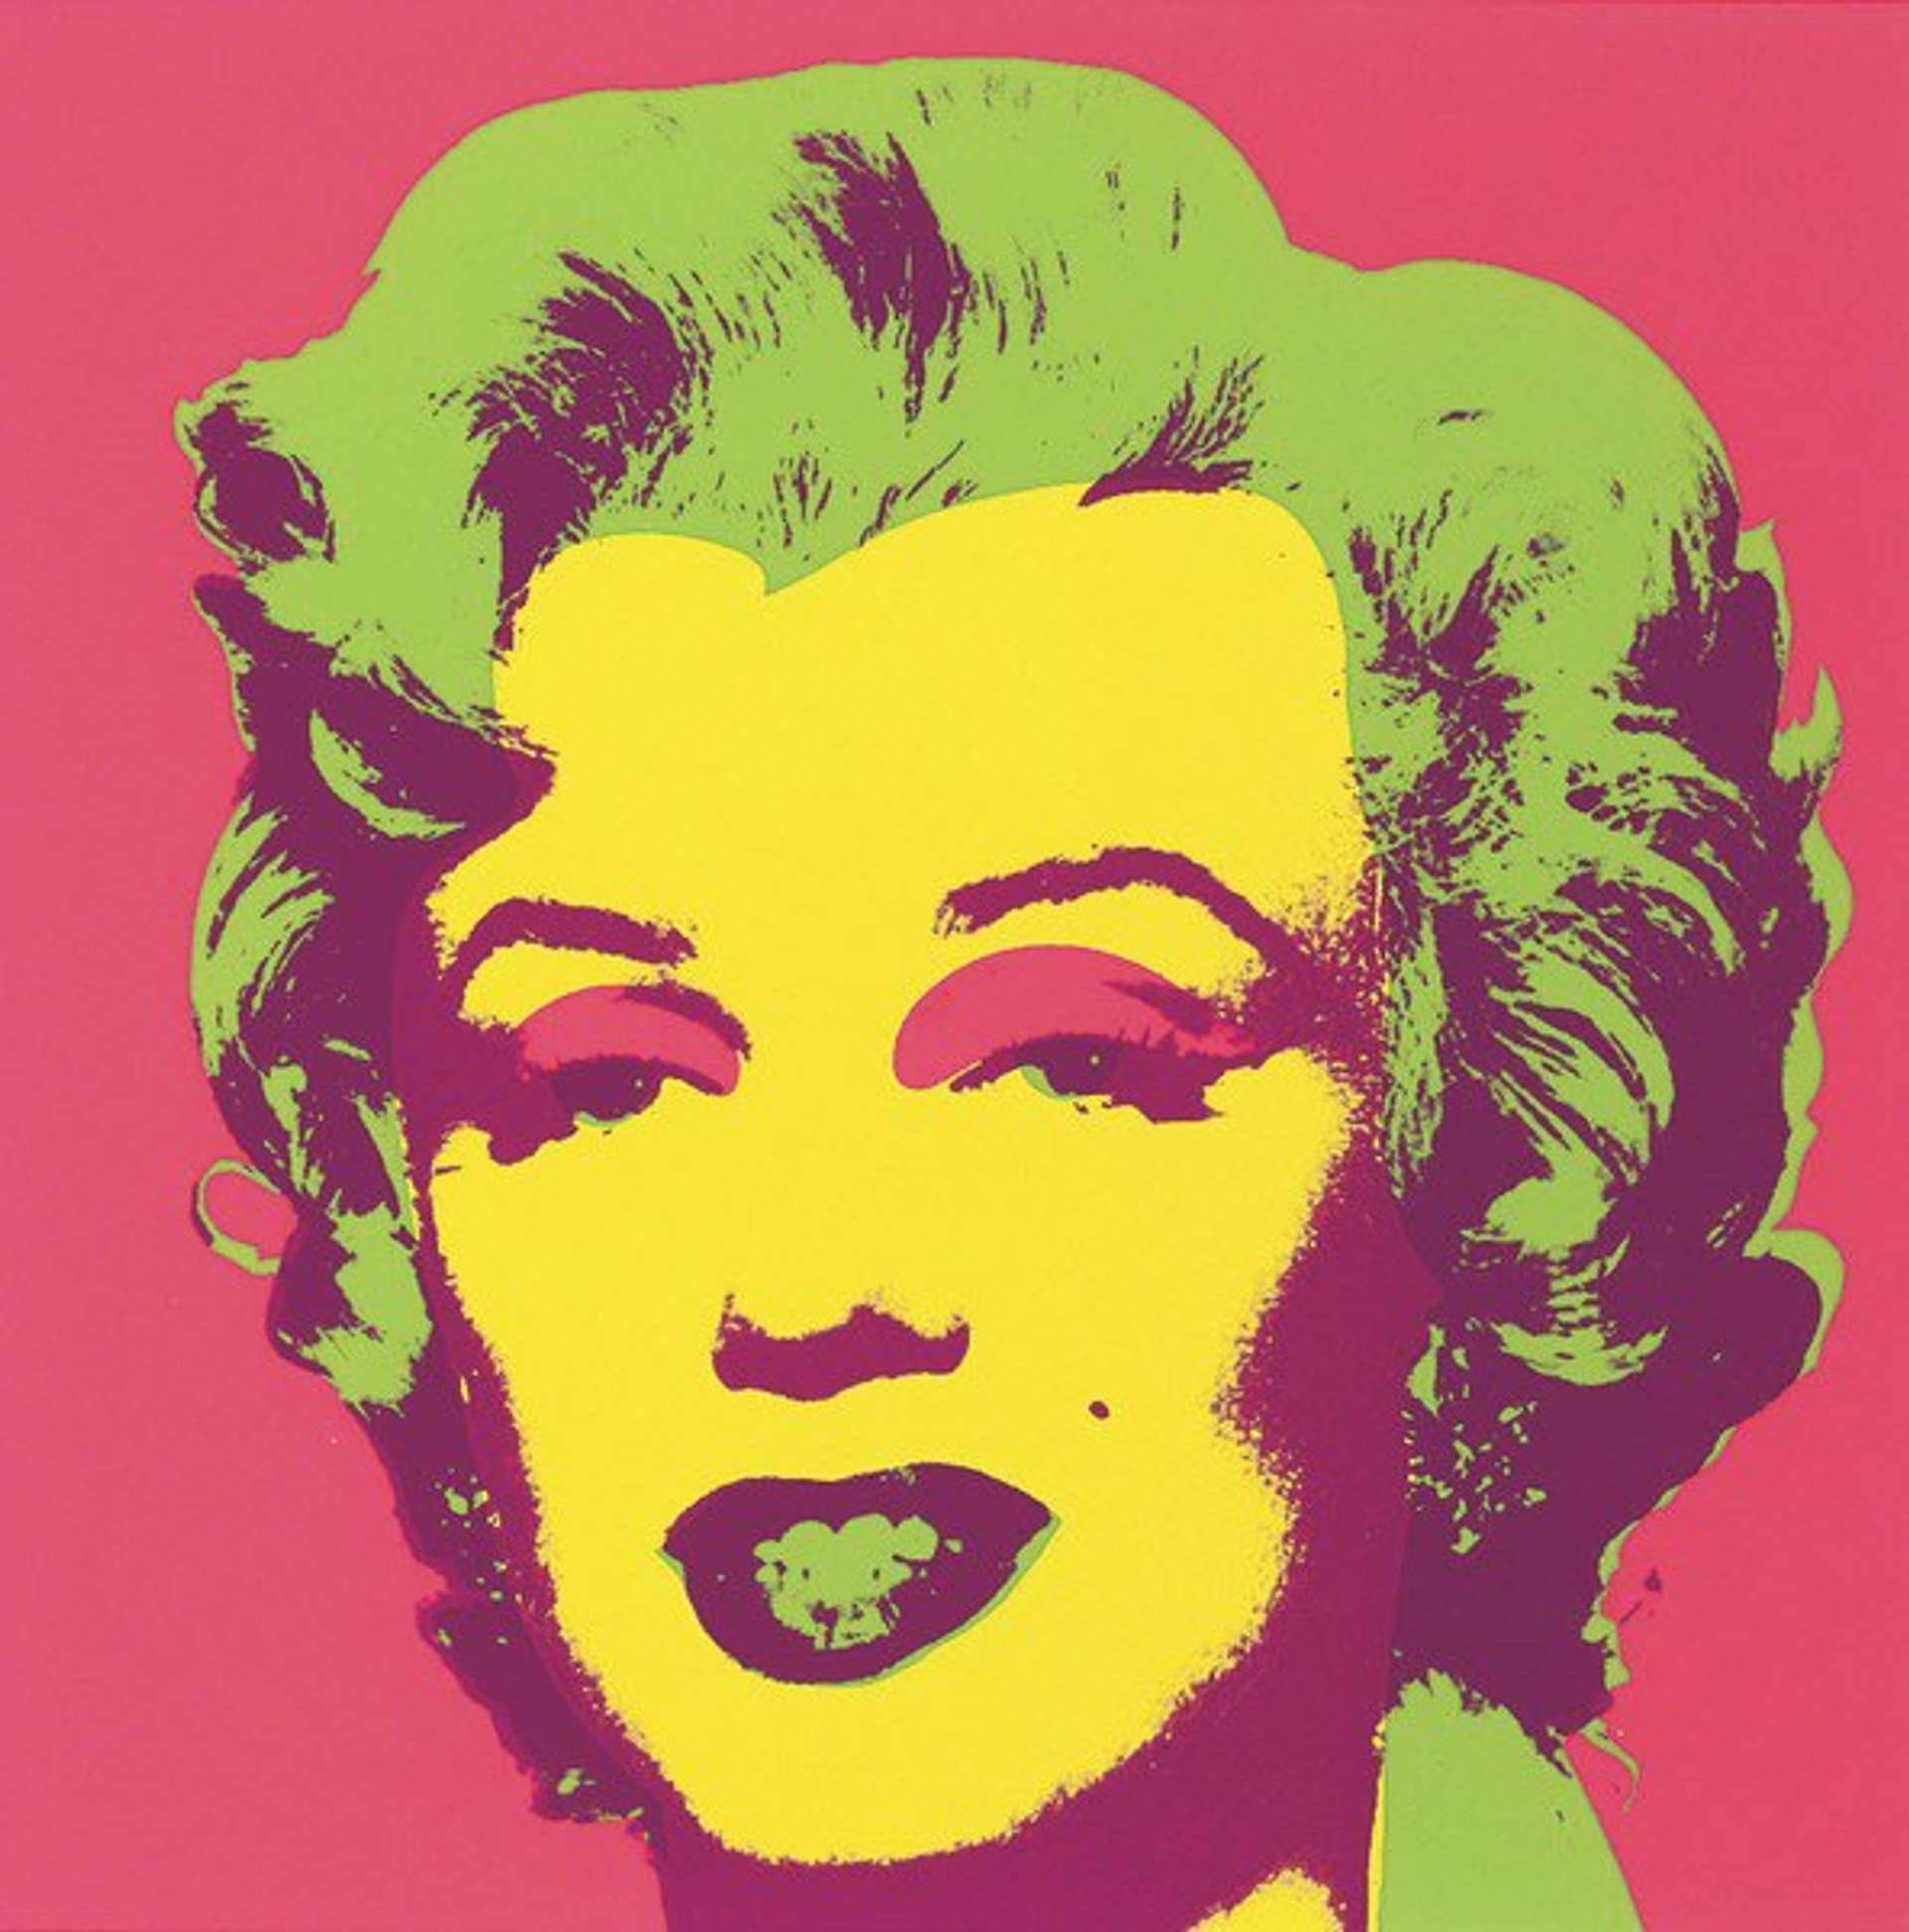 Andy Warhol, Liz (1989)